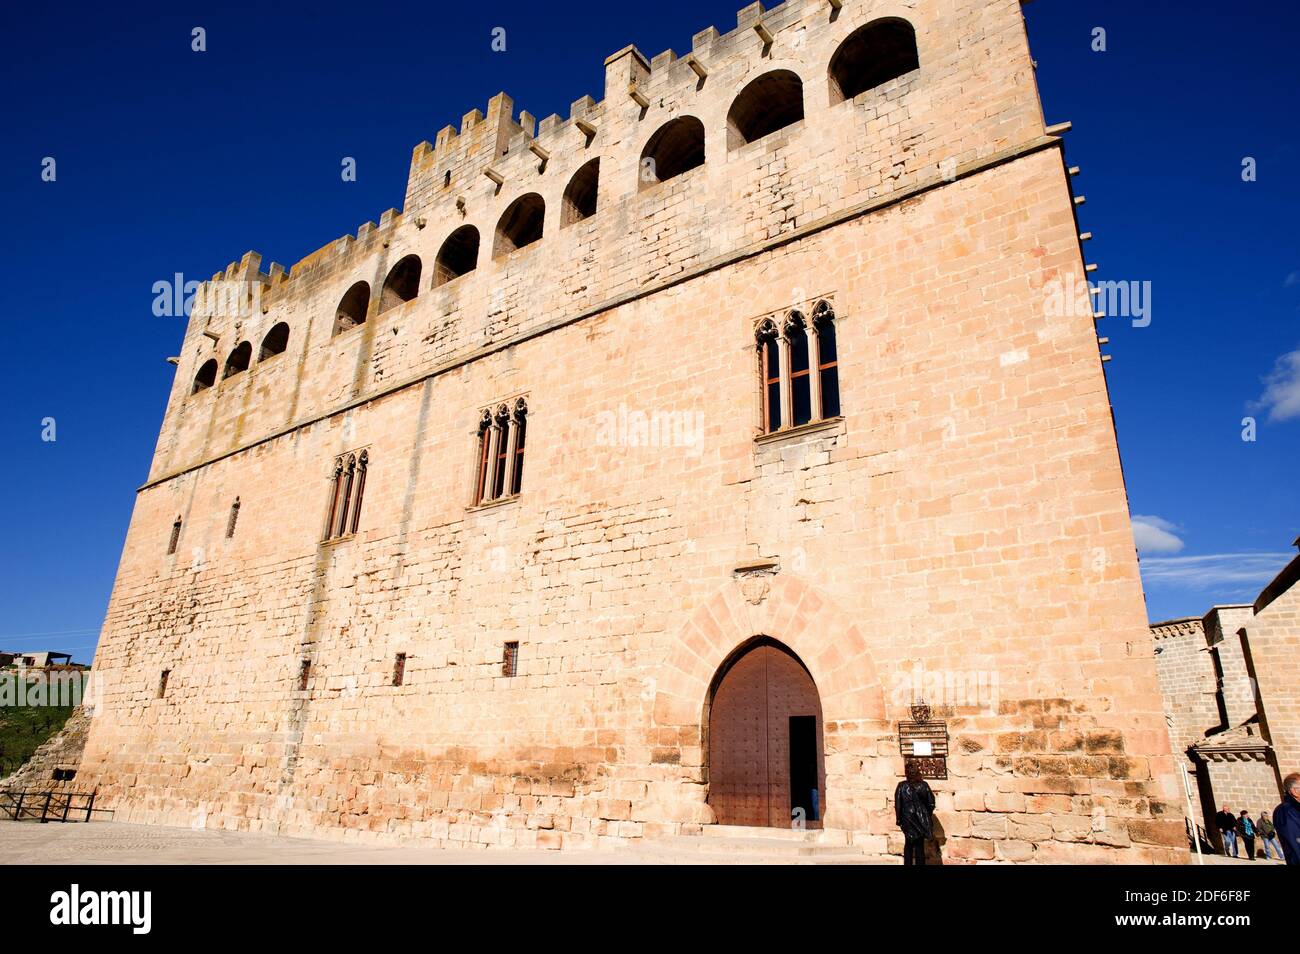 Valderrobres or Vall-de-roures, castle-palace (National Monument). Matarraña region, Teruel province, Aragon, Spain. Stock Photo